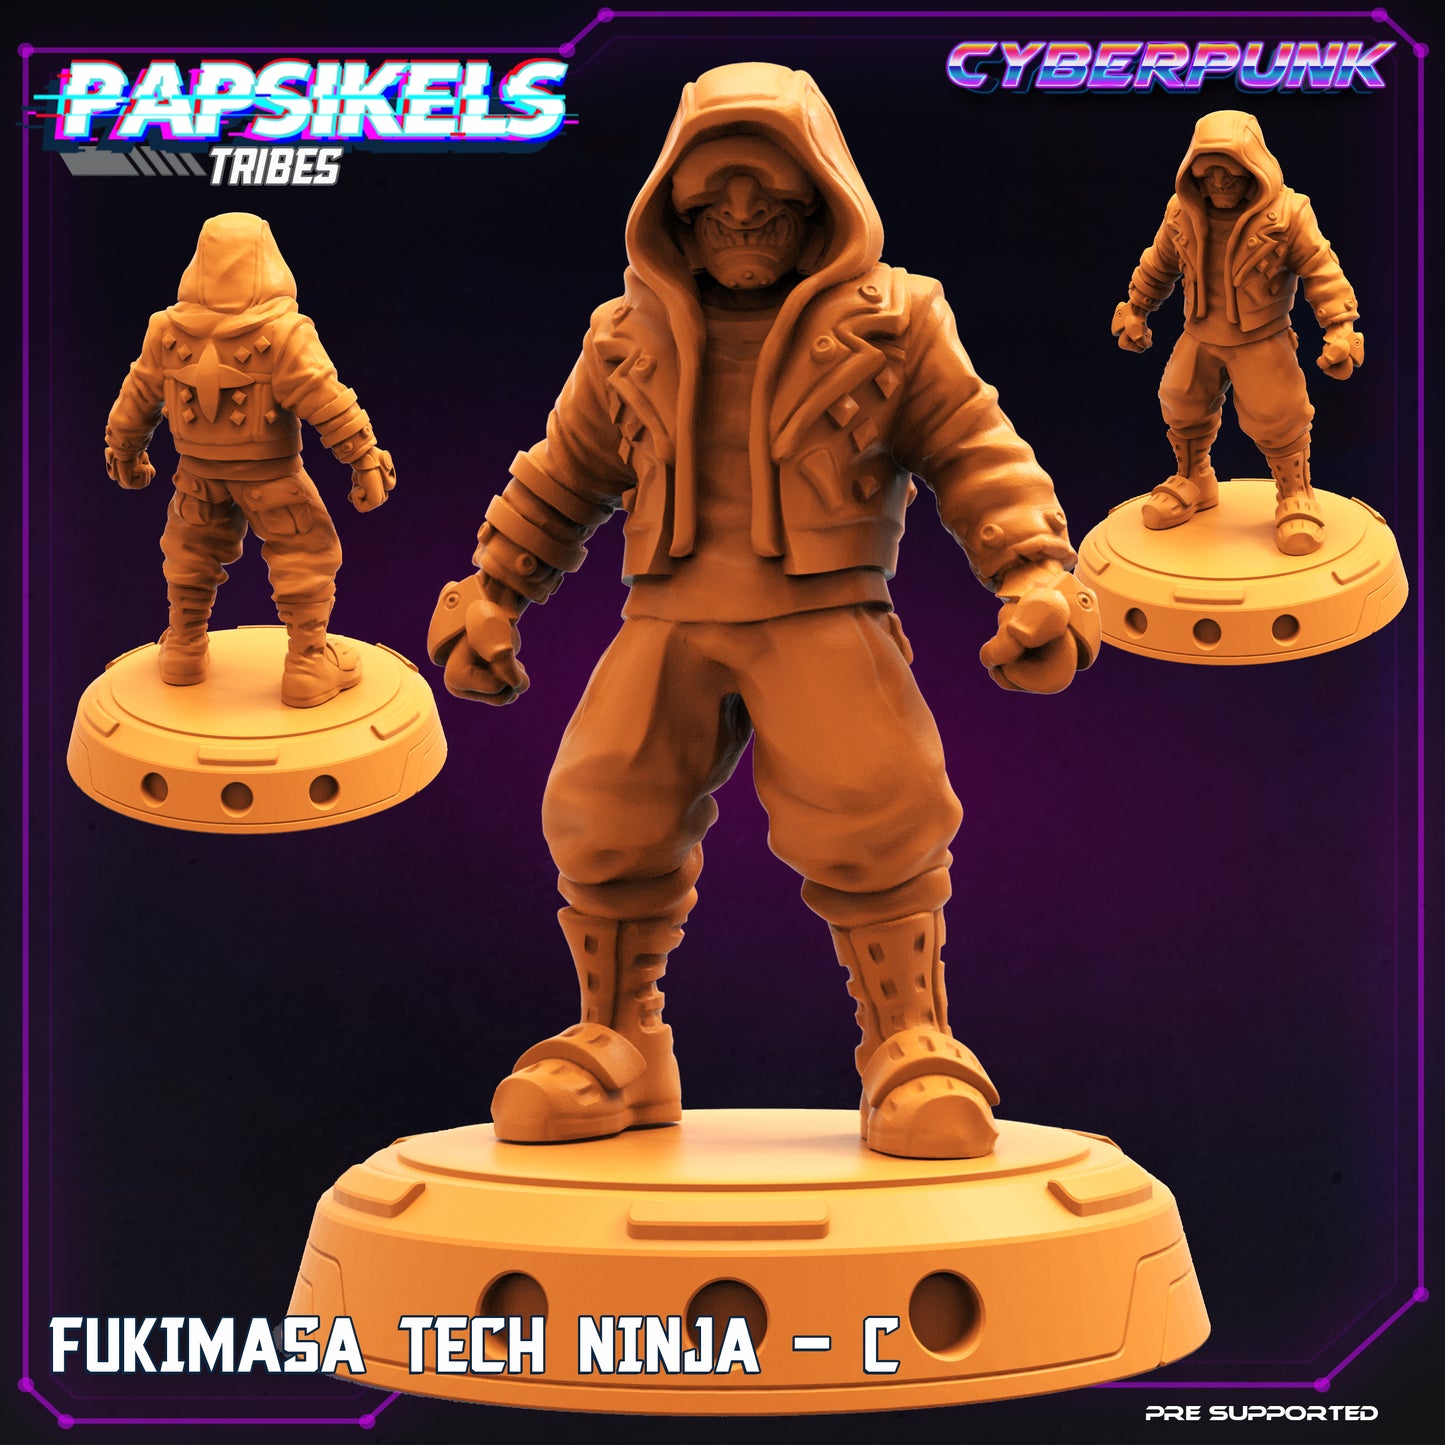 Fukimasa Tech Ninja, Fist